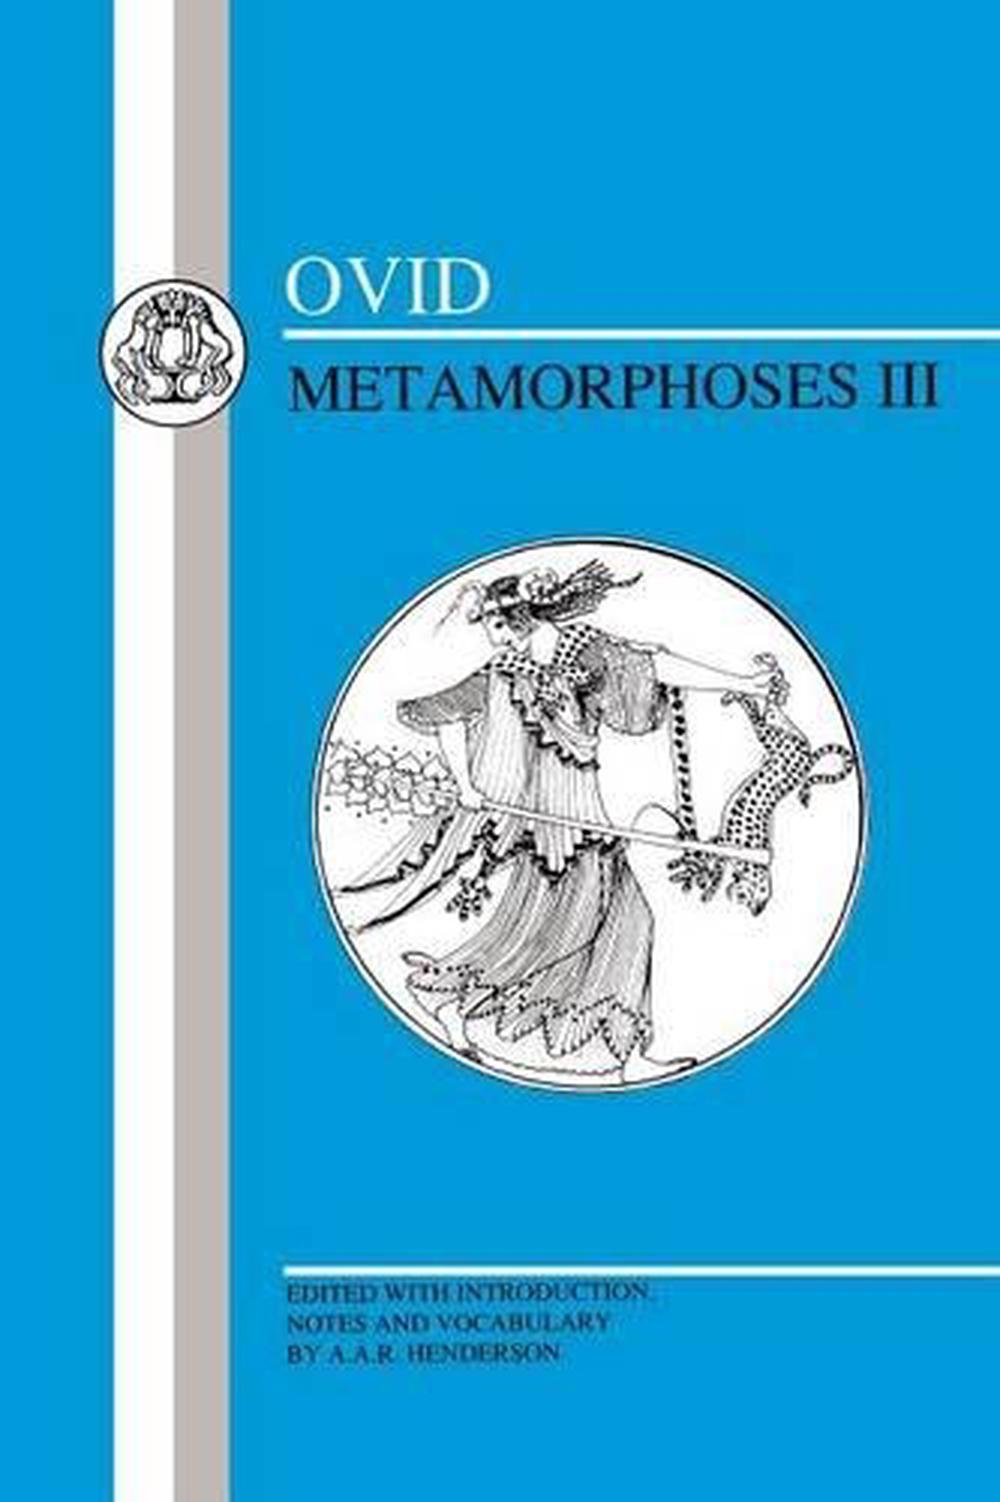 Ovid Metamorphoses III by Ovid (English) Paperback Book Free Shipping